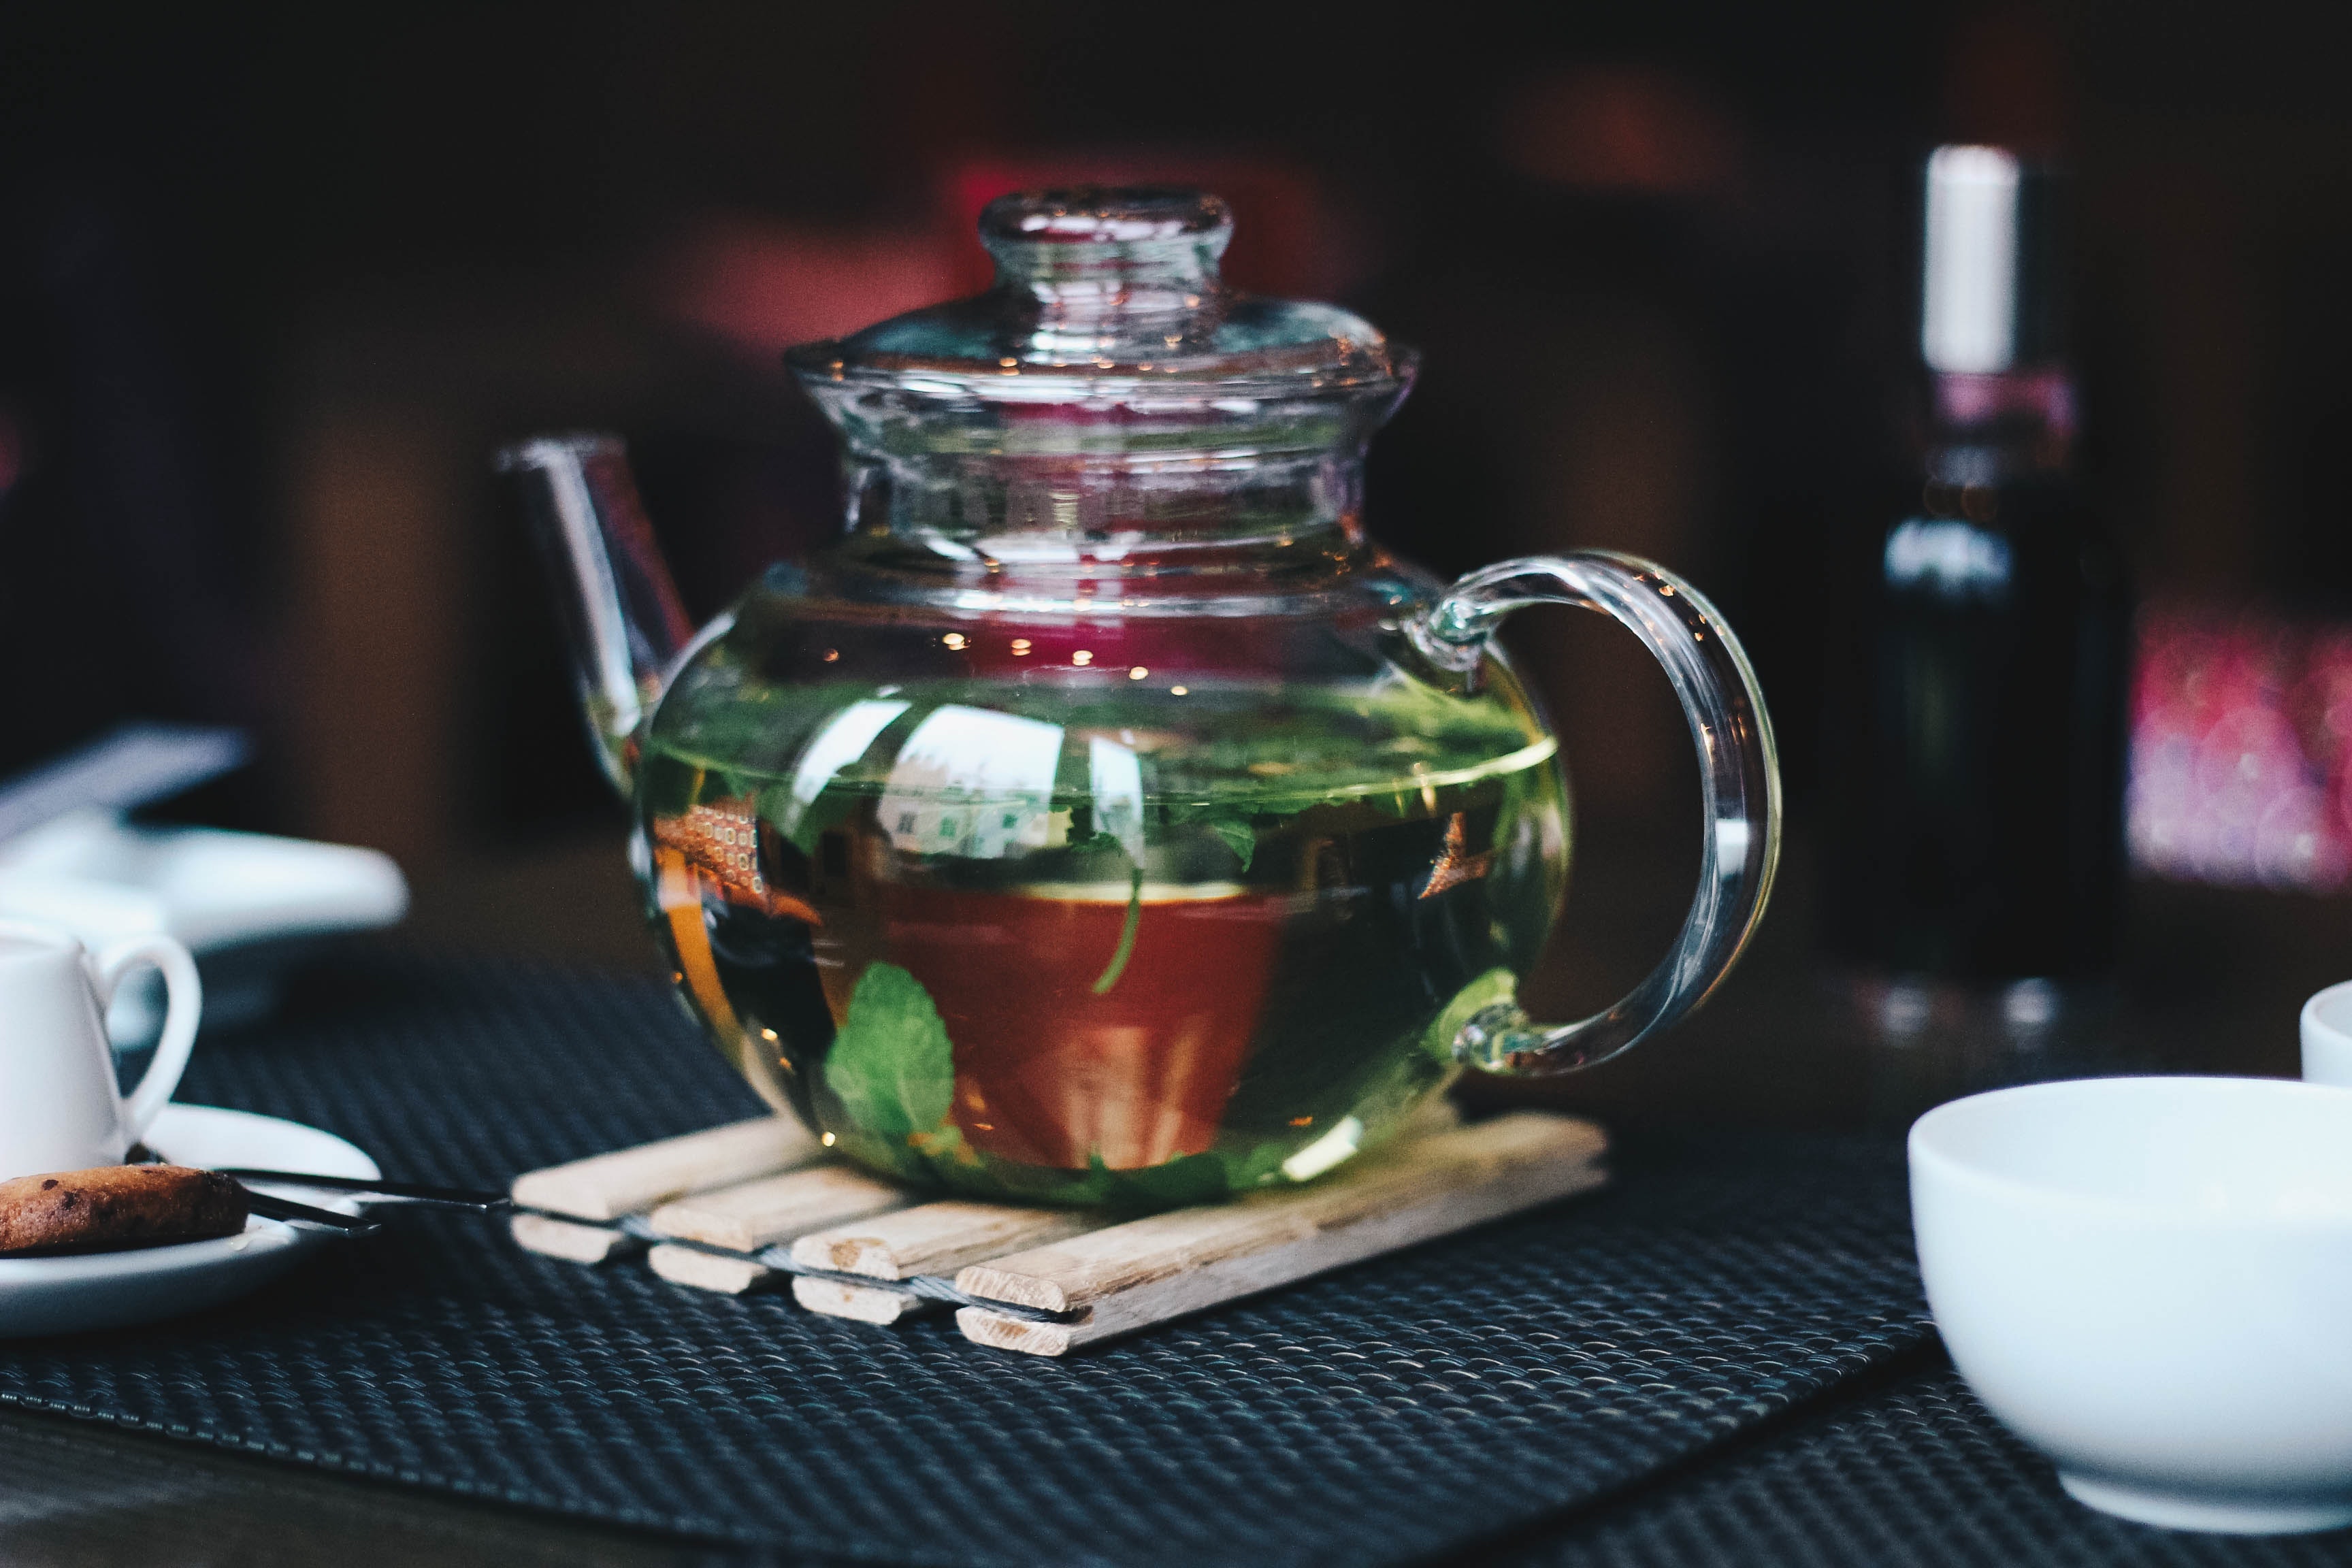 Experience the Top 3 Spots for High Tea Near Redmond